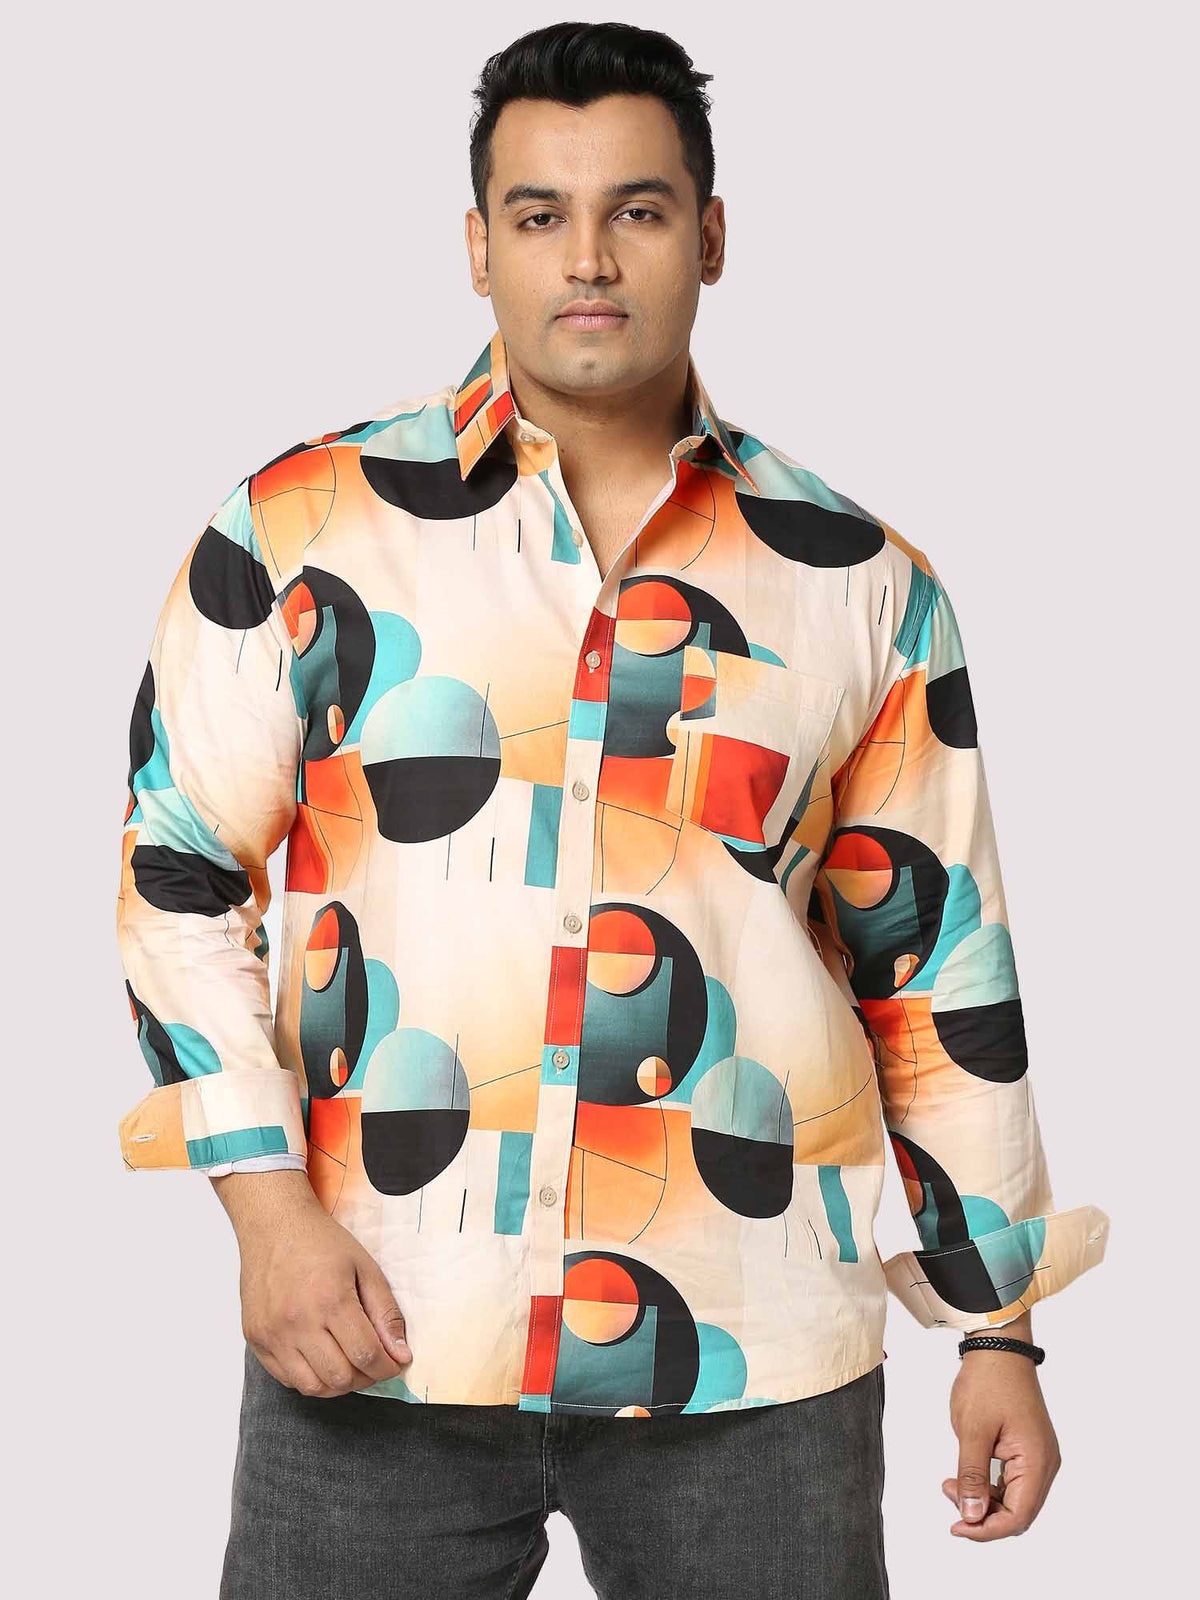 Guniaa Groove Digital Printed Full-Sleeves Shirt - Guniaa Fashions